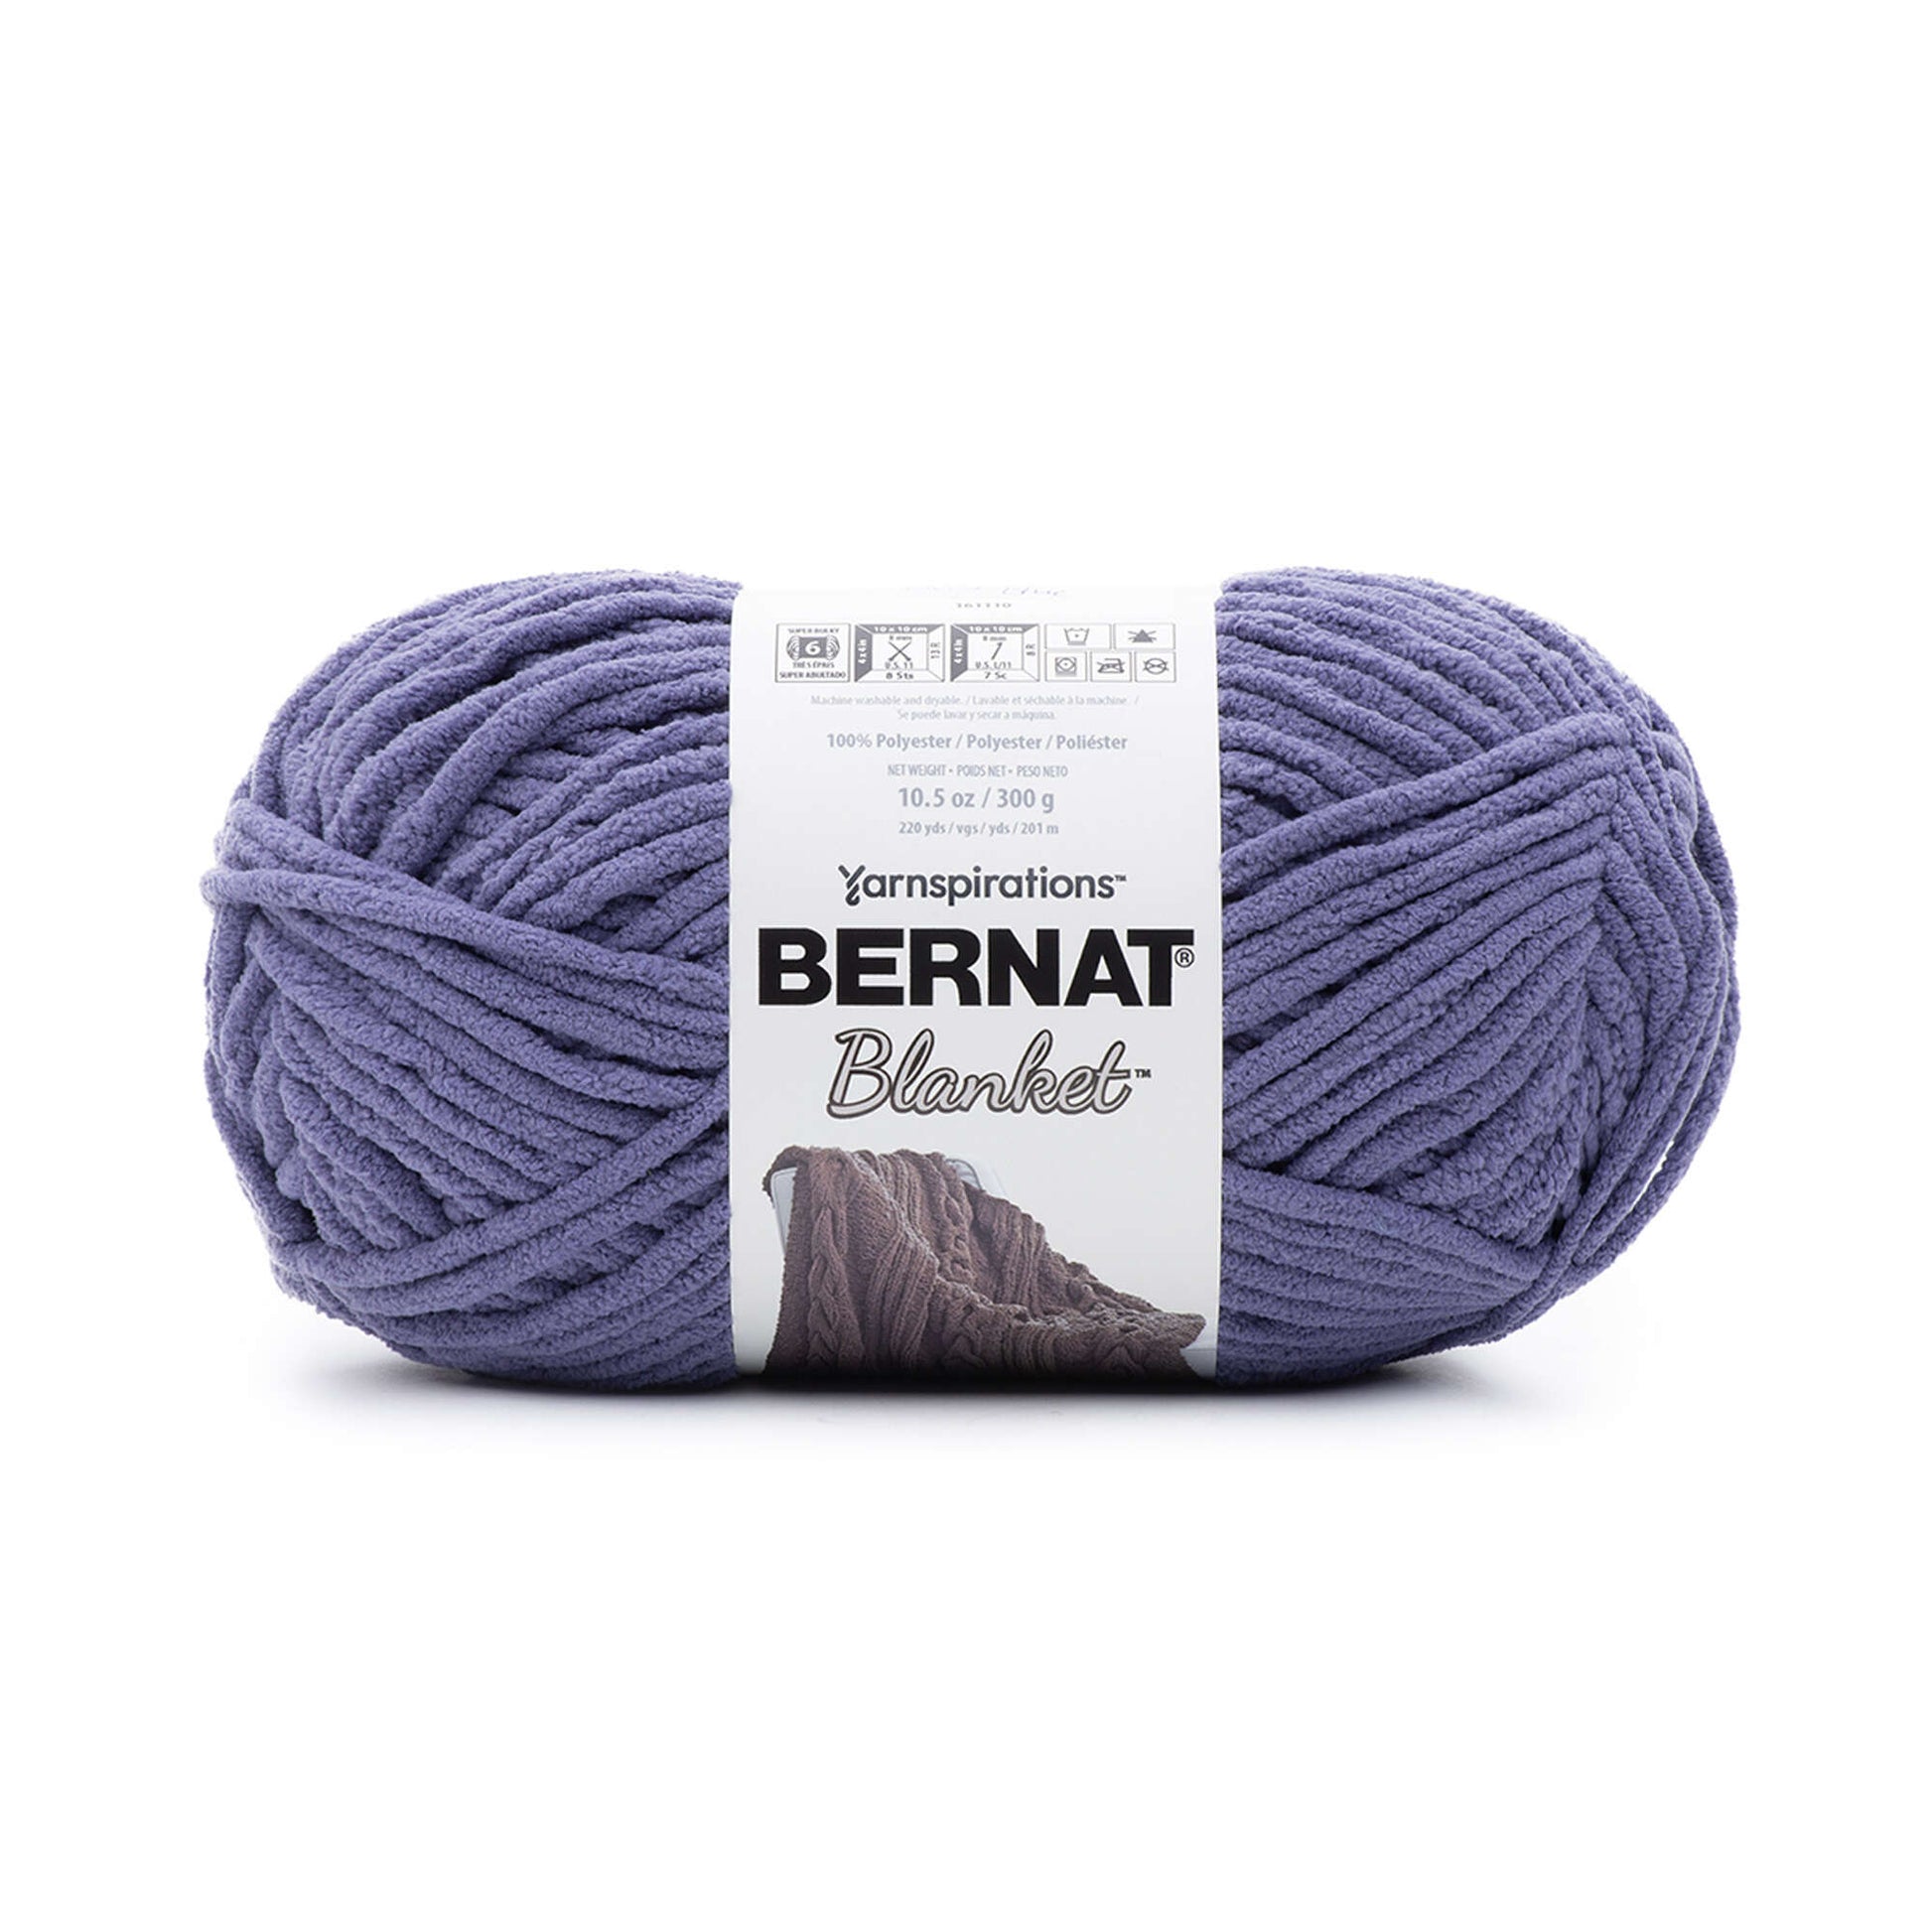 Bernat Blanket Purple Haze Yarn - 2 Pack of 300g/10.5oz - Polyester - 6  Super Bulky - 220 Yards - Knitting/Crochet